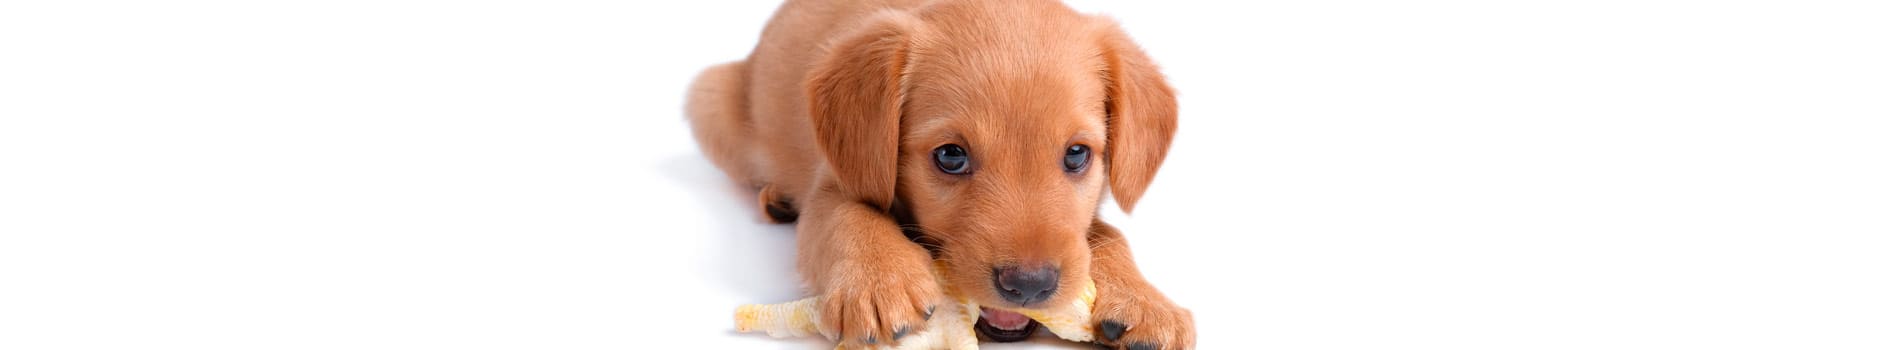 Petmeal dieta especializada para perros